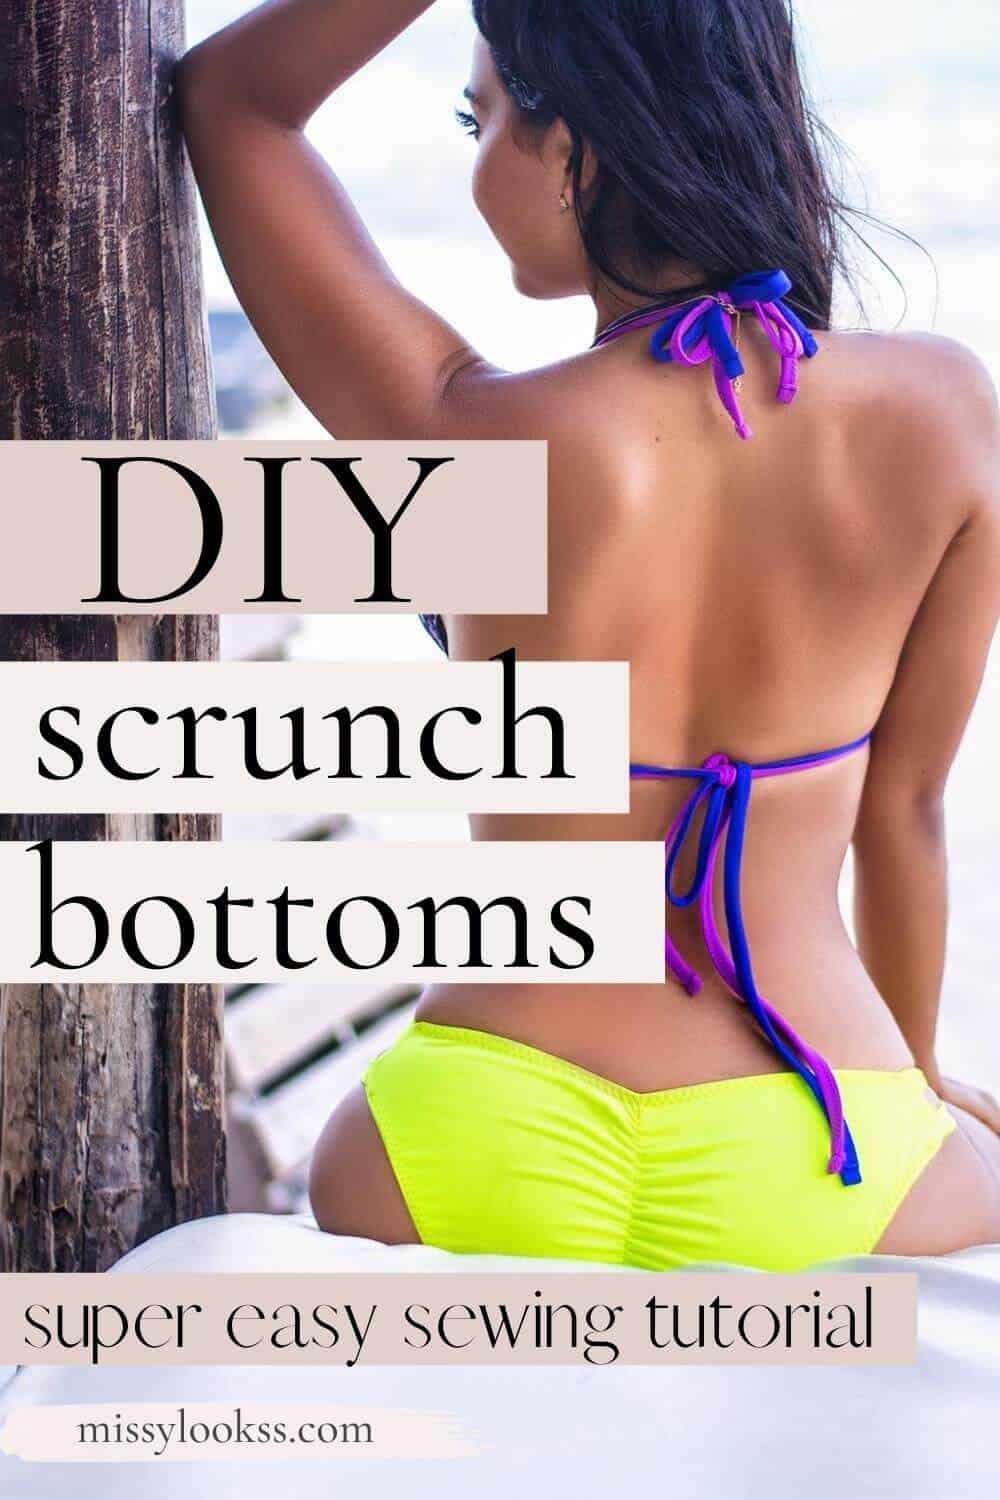 DIY Scrunch bottoms